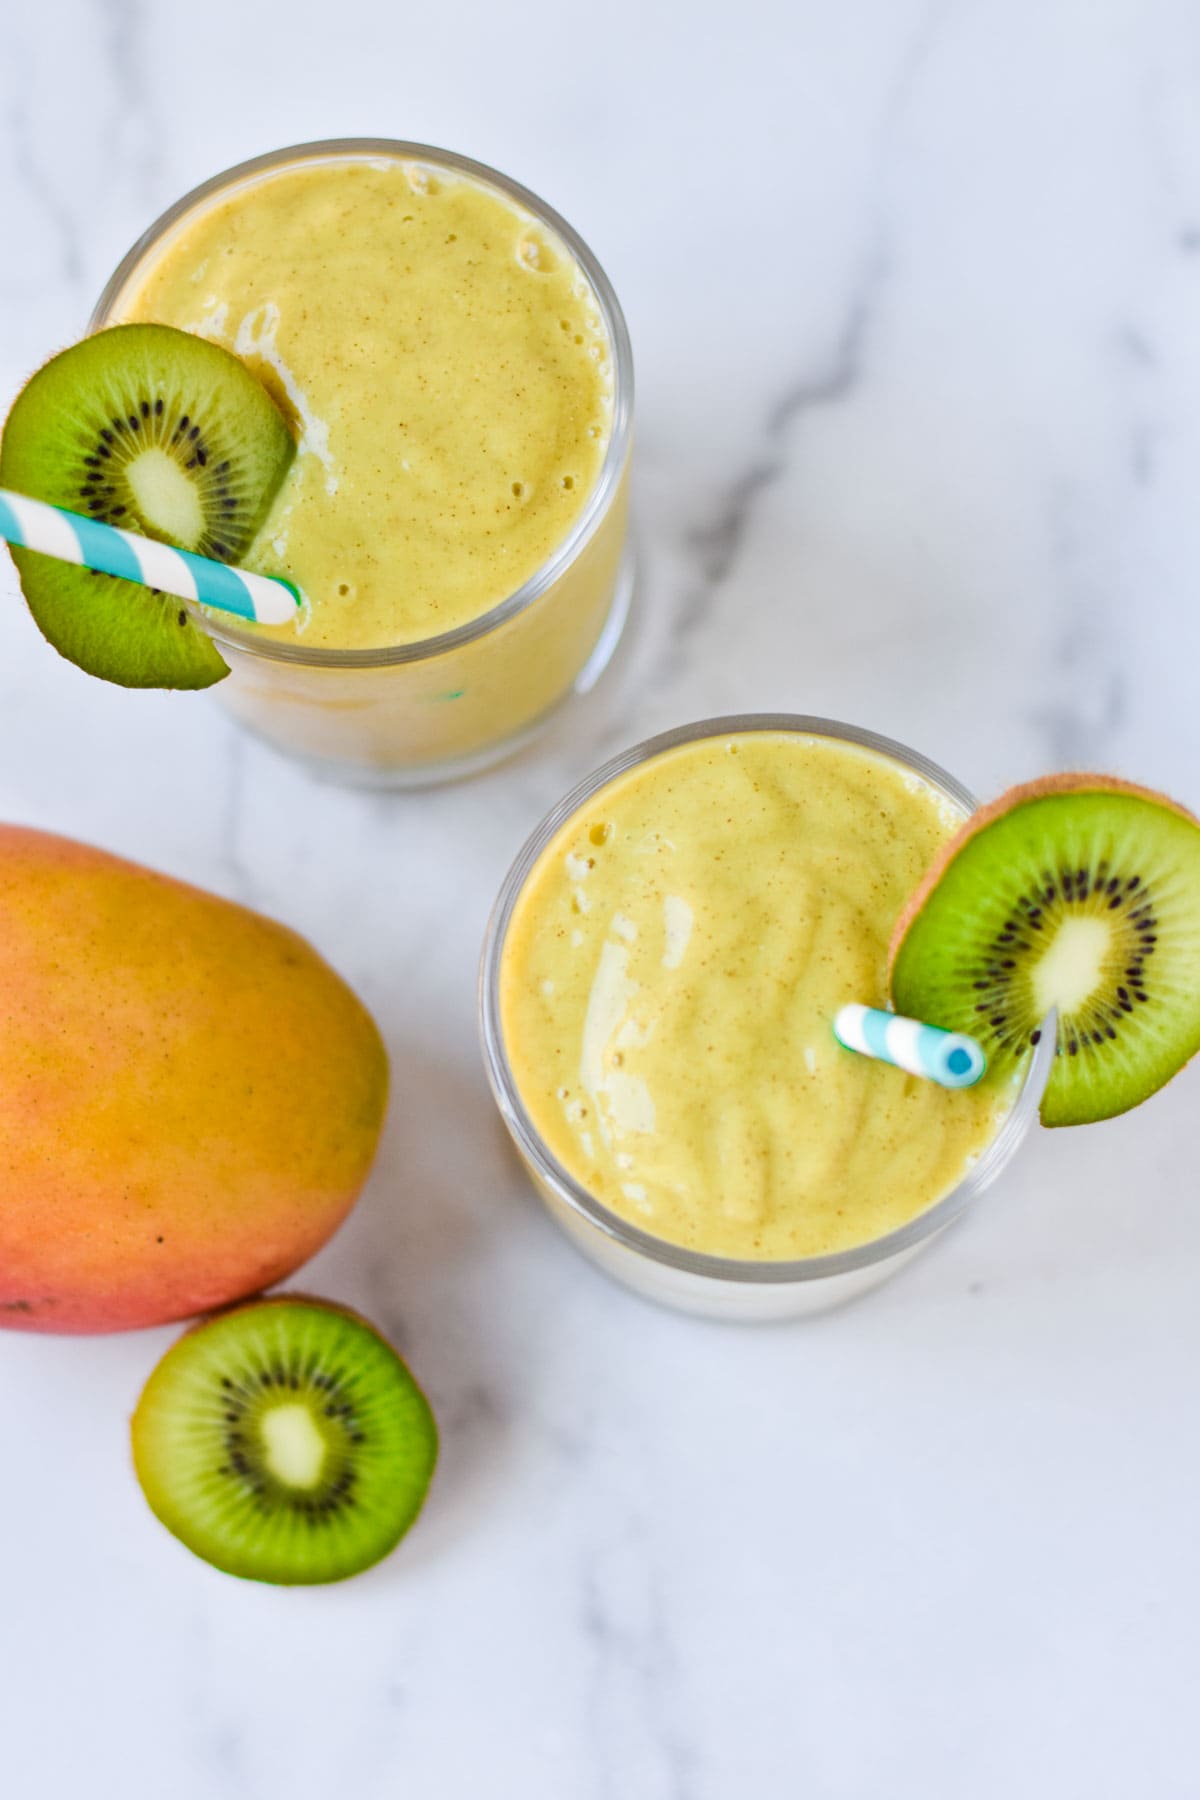 Two glasses of a bright yellow smoothie next to a fresh mango and kiwi fruit.